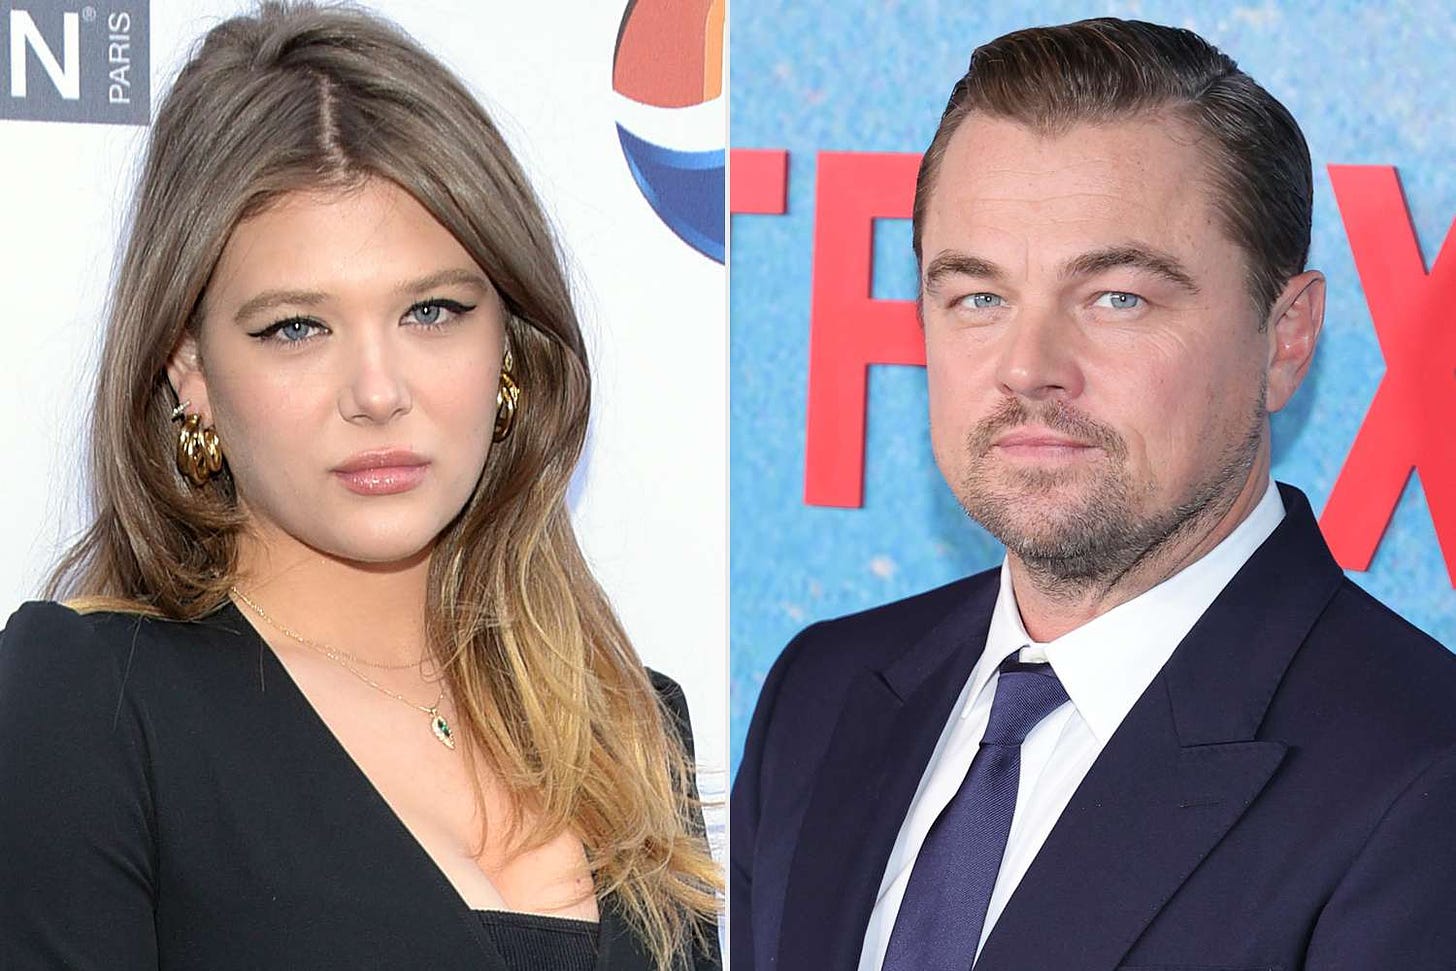 Victoria Lamas' Father Says She Likes Leonardo DiCaprio 'Very Much'